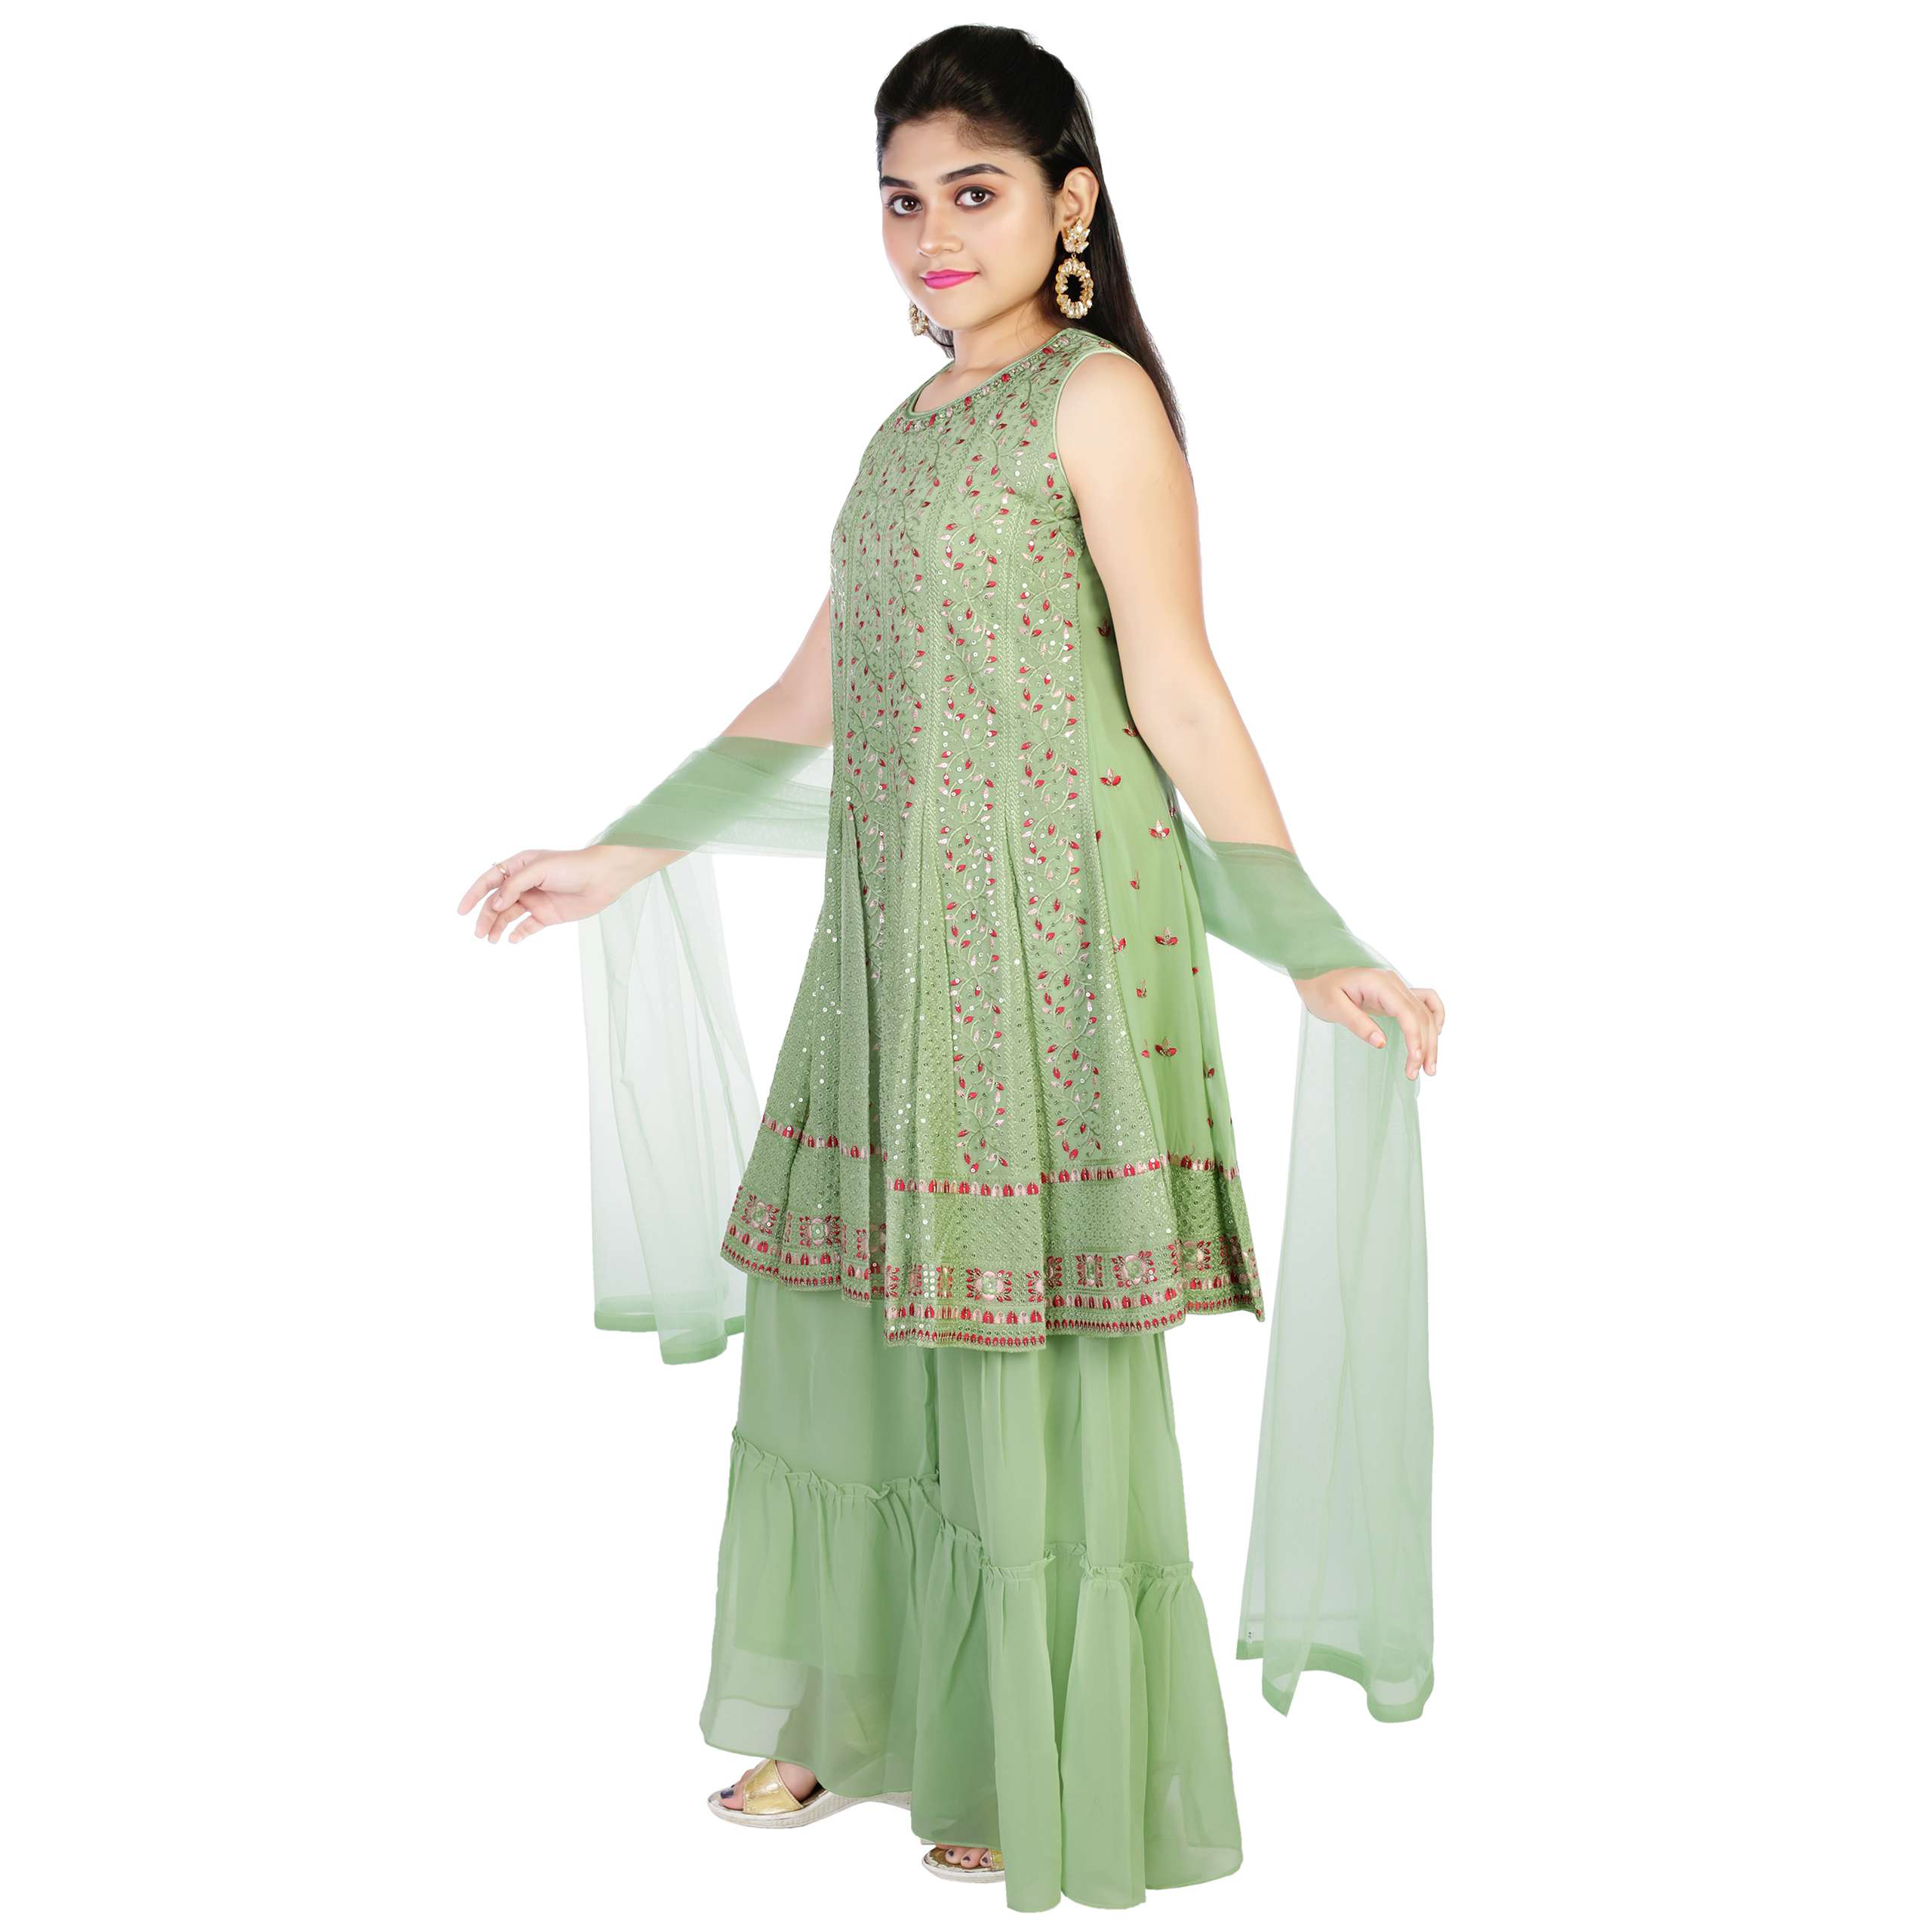 Balaji Emporium Presents Kids Wear Special Designer Indian Party Wear Sharara Salwar Kameez Suit Girlish Dress Collection At Best Price 1121